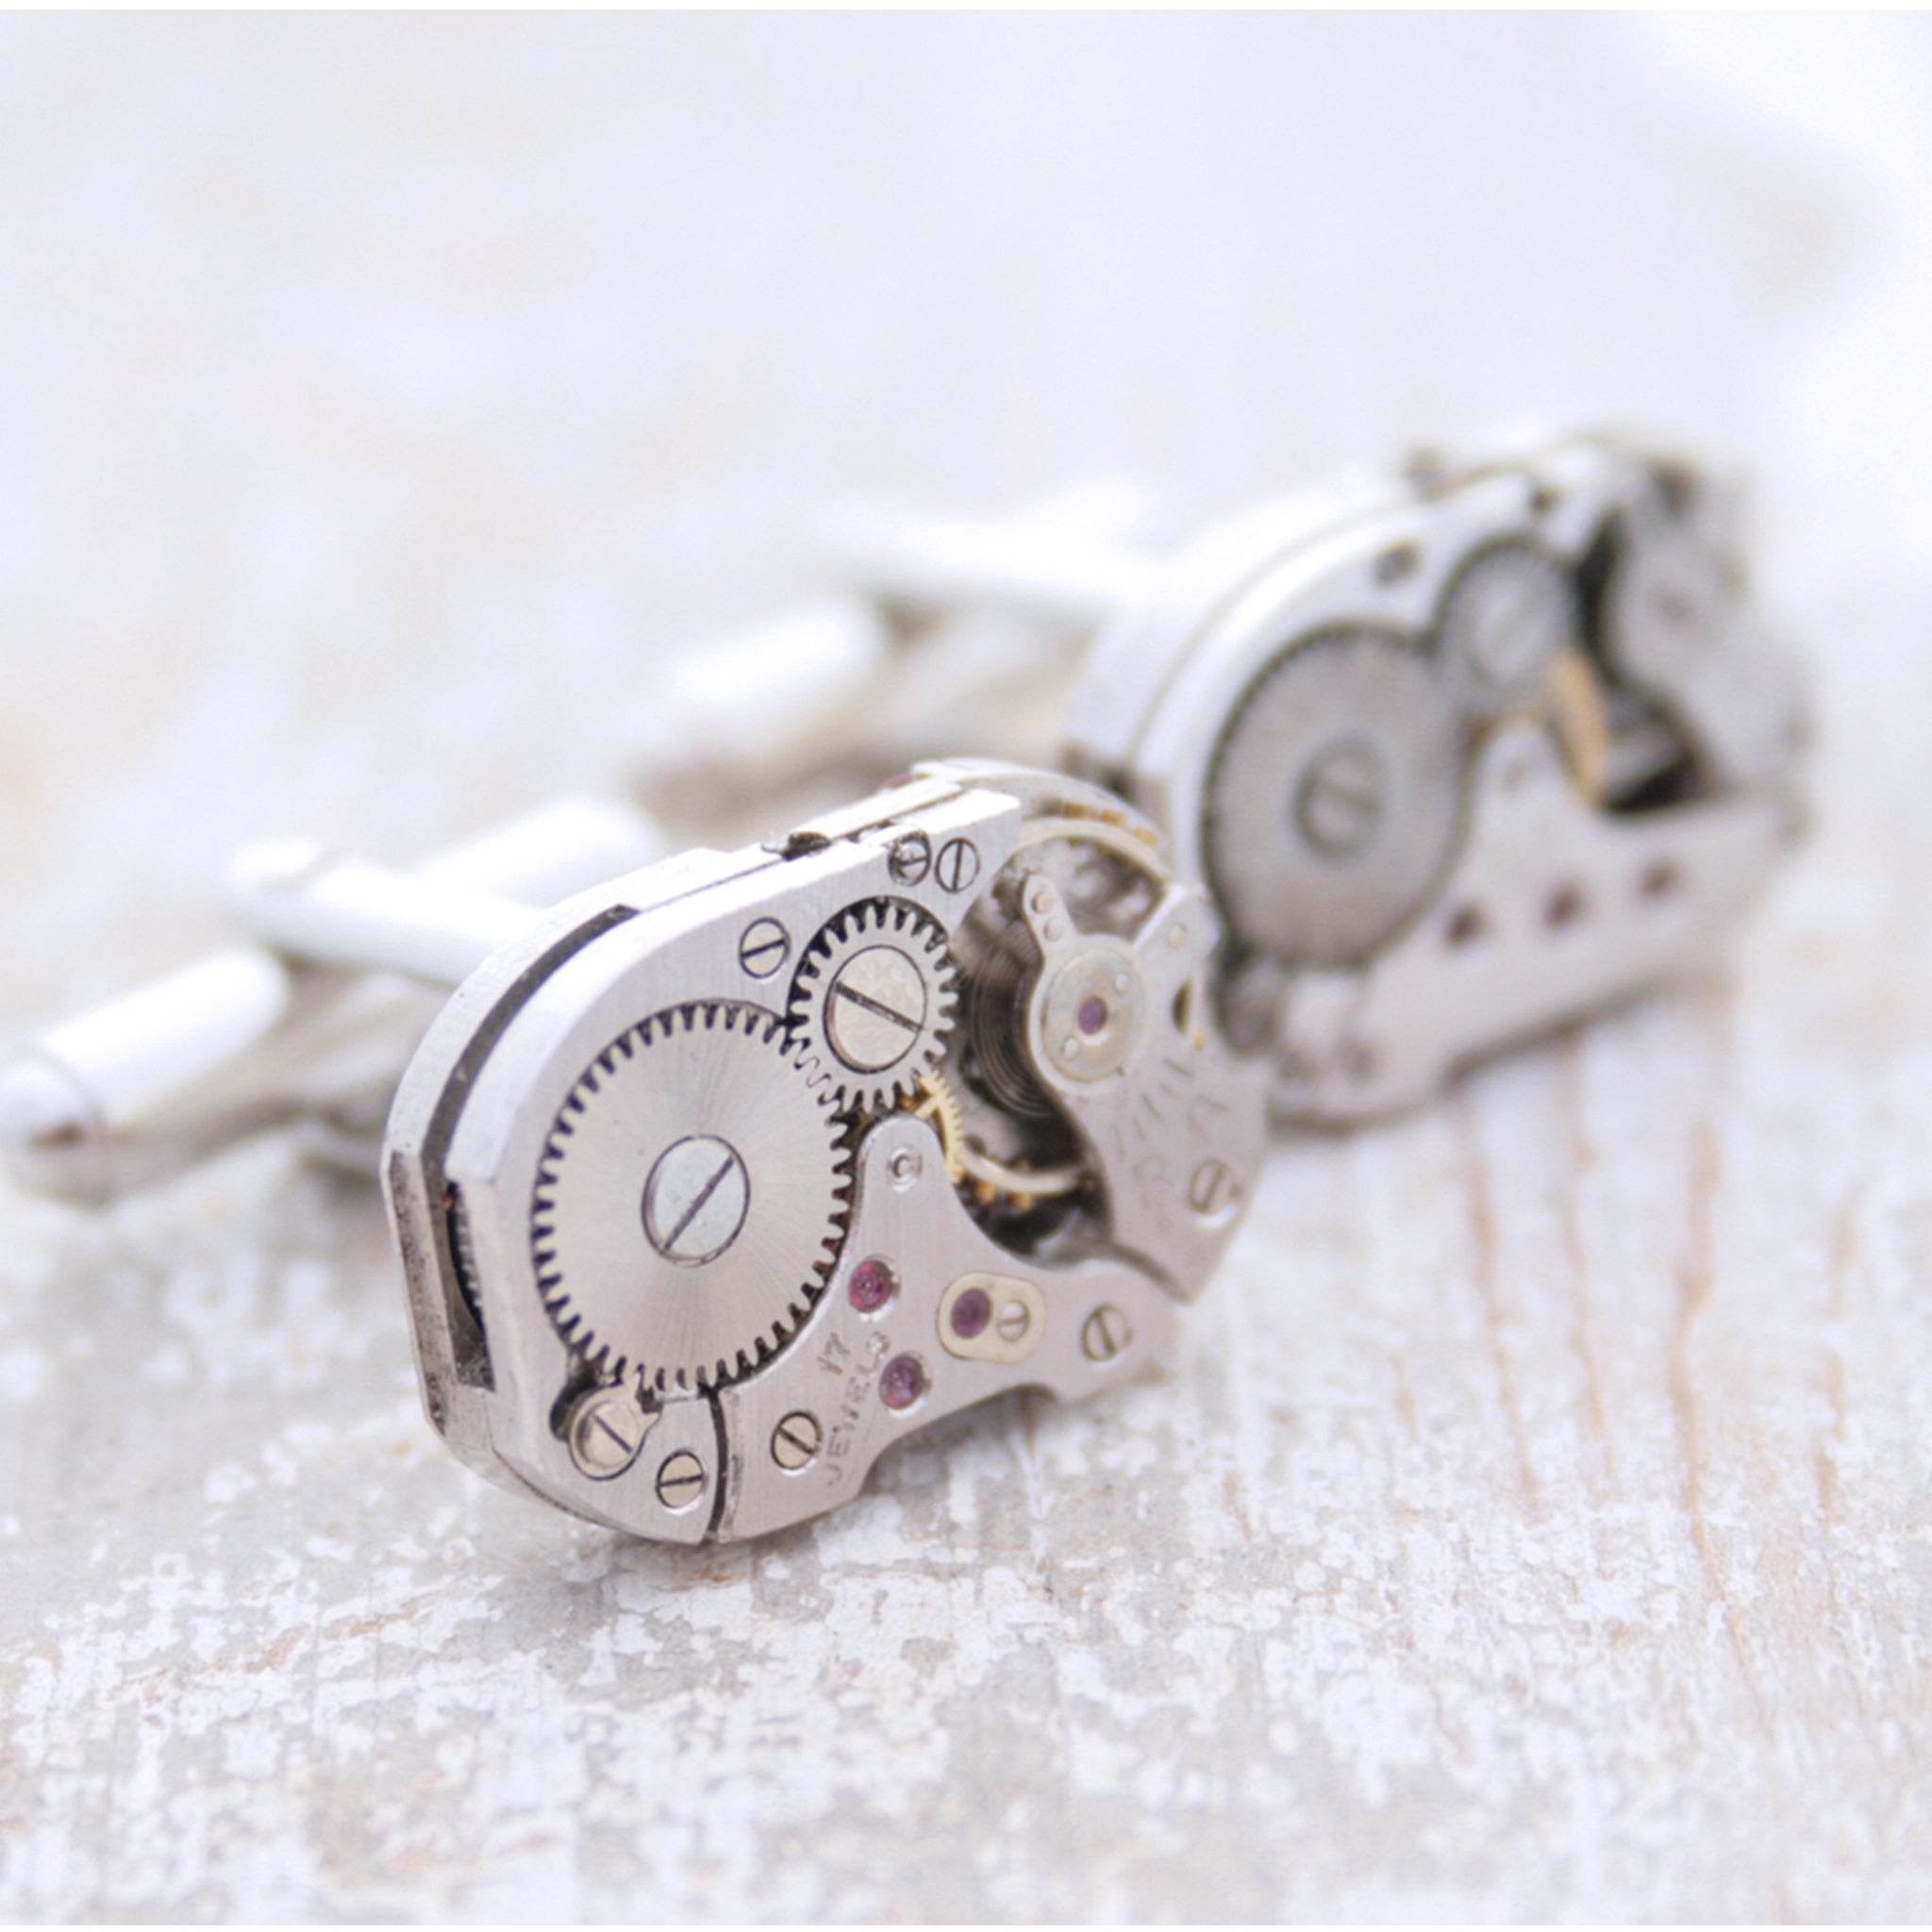 Steampunk Cufflinks made of Swiss watch movements